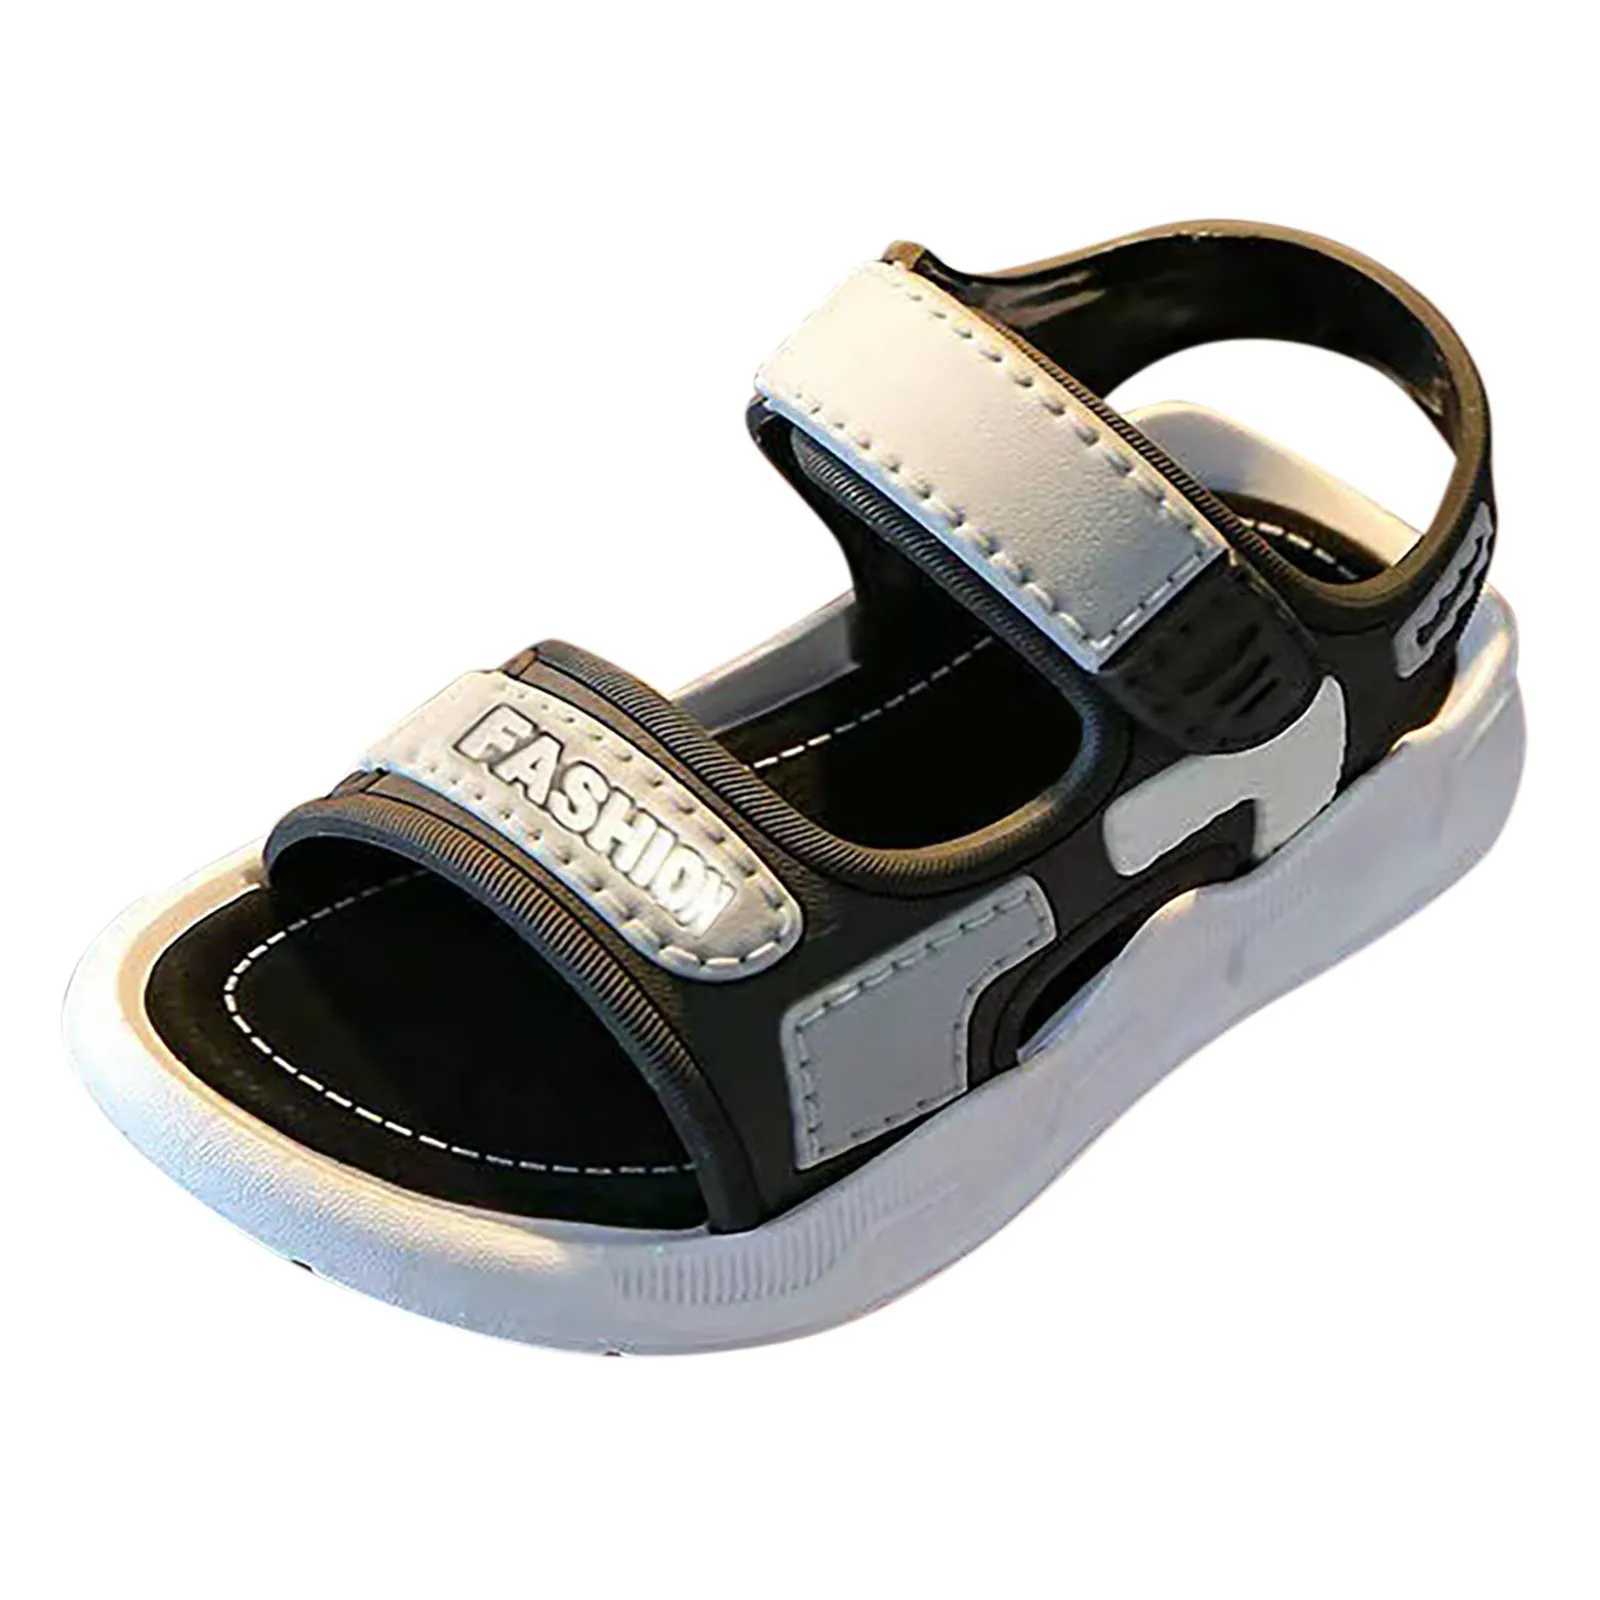 Sandals Homepage Slider Childrens Cartoon Soft Sole Summer Comfortable Boys Sandals Youth Sandals Size 2 Sandals Size 5 Boys d240515